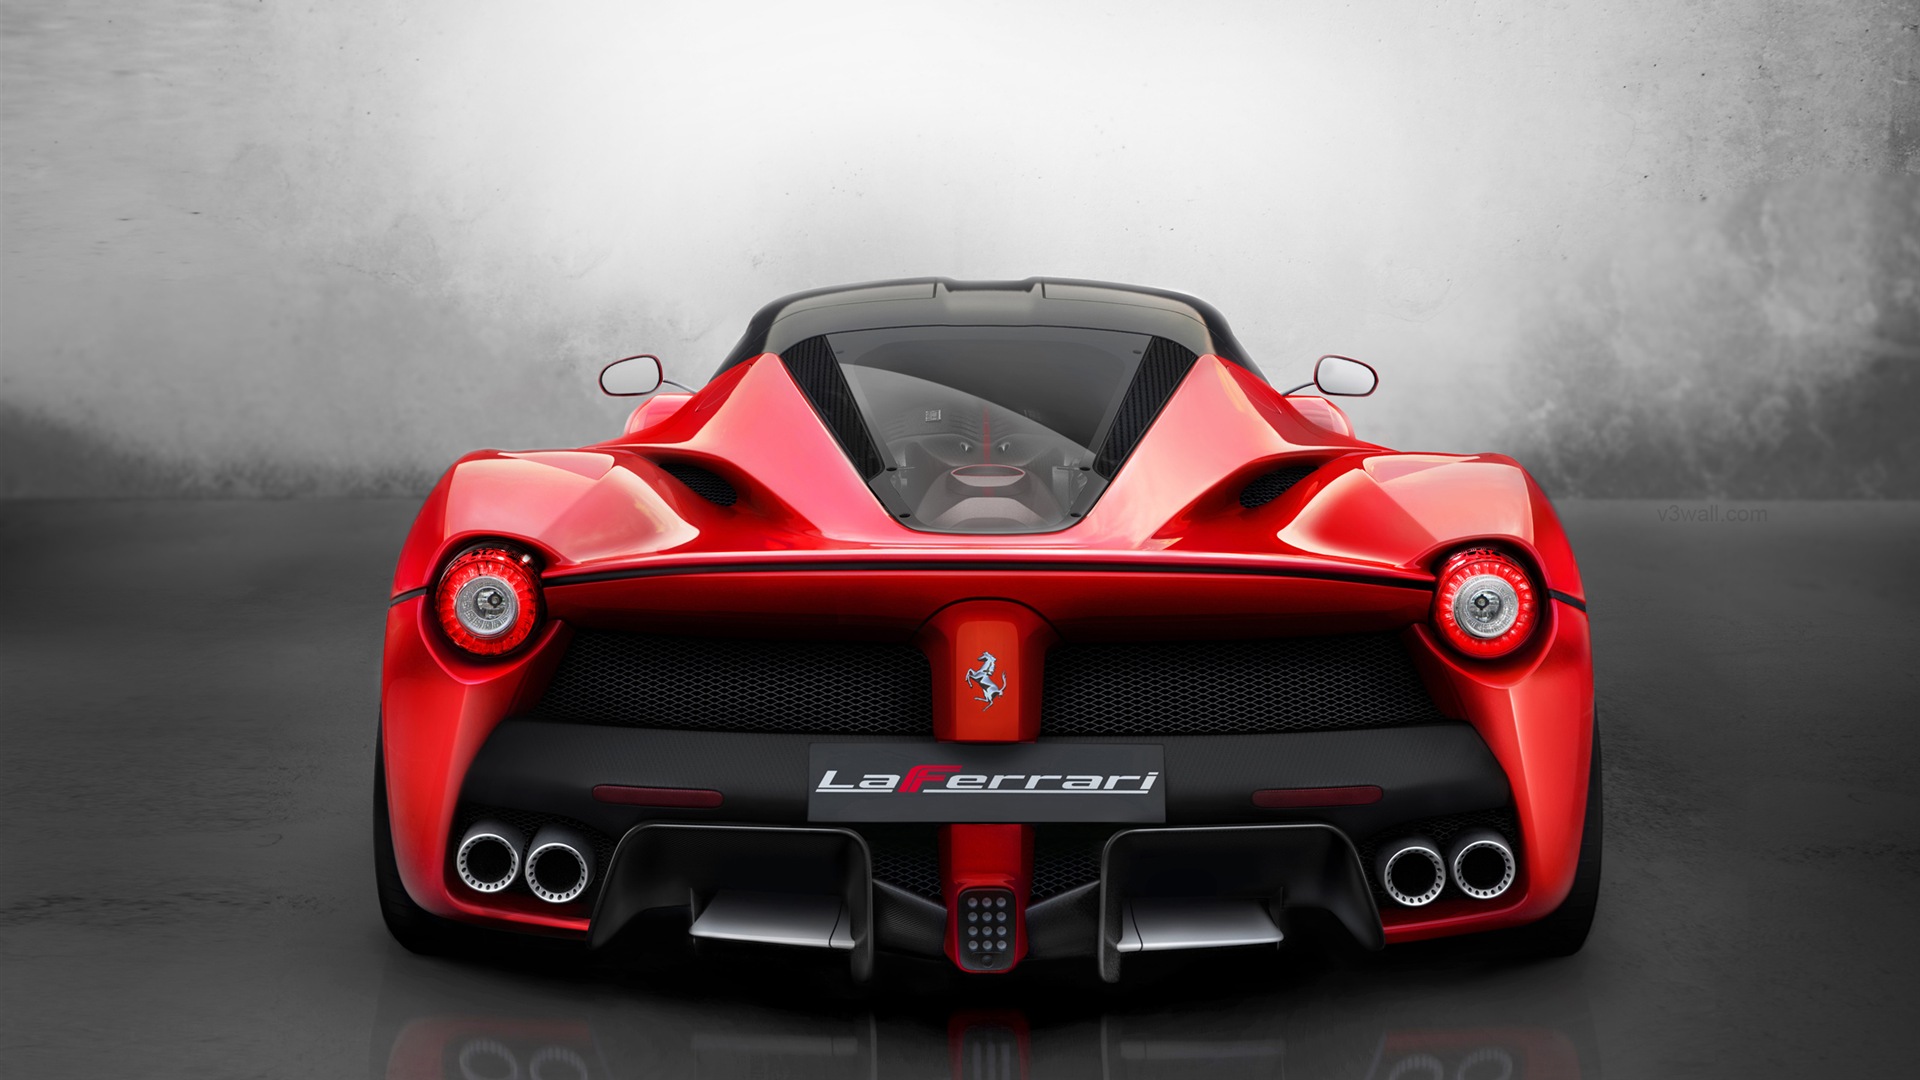 2013 Ferrari LaFerrari 法拉利LaFerrari红色超级跑车高清壁纸5 - 1920x1080